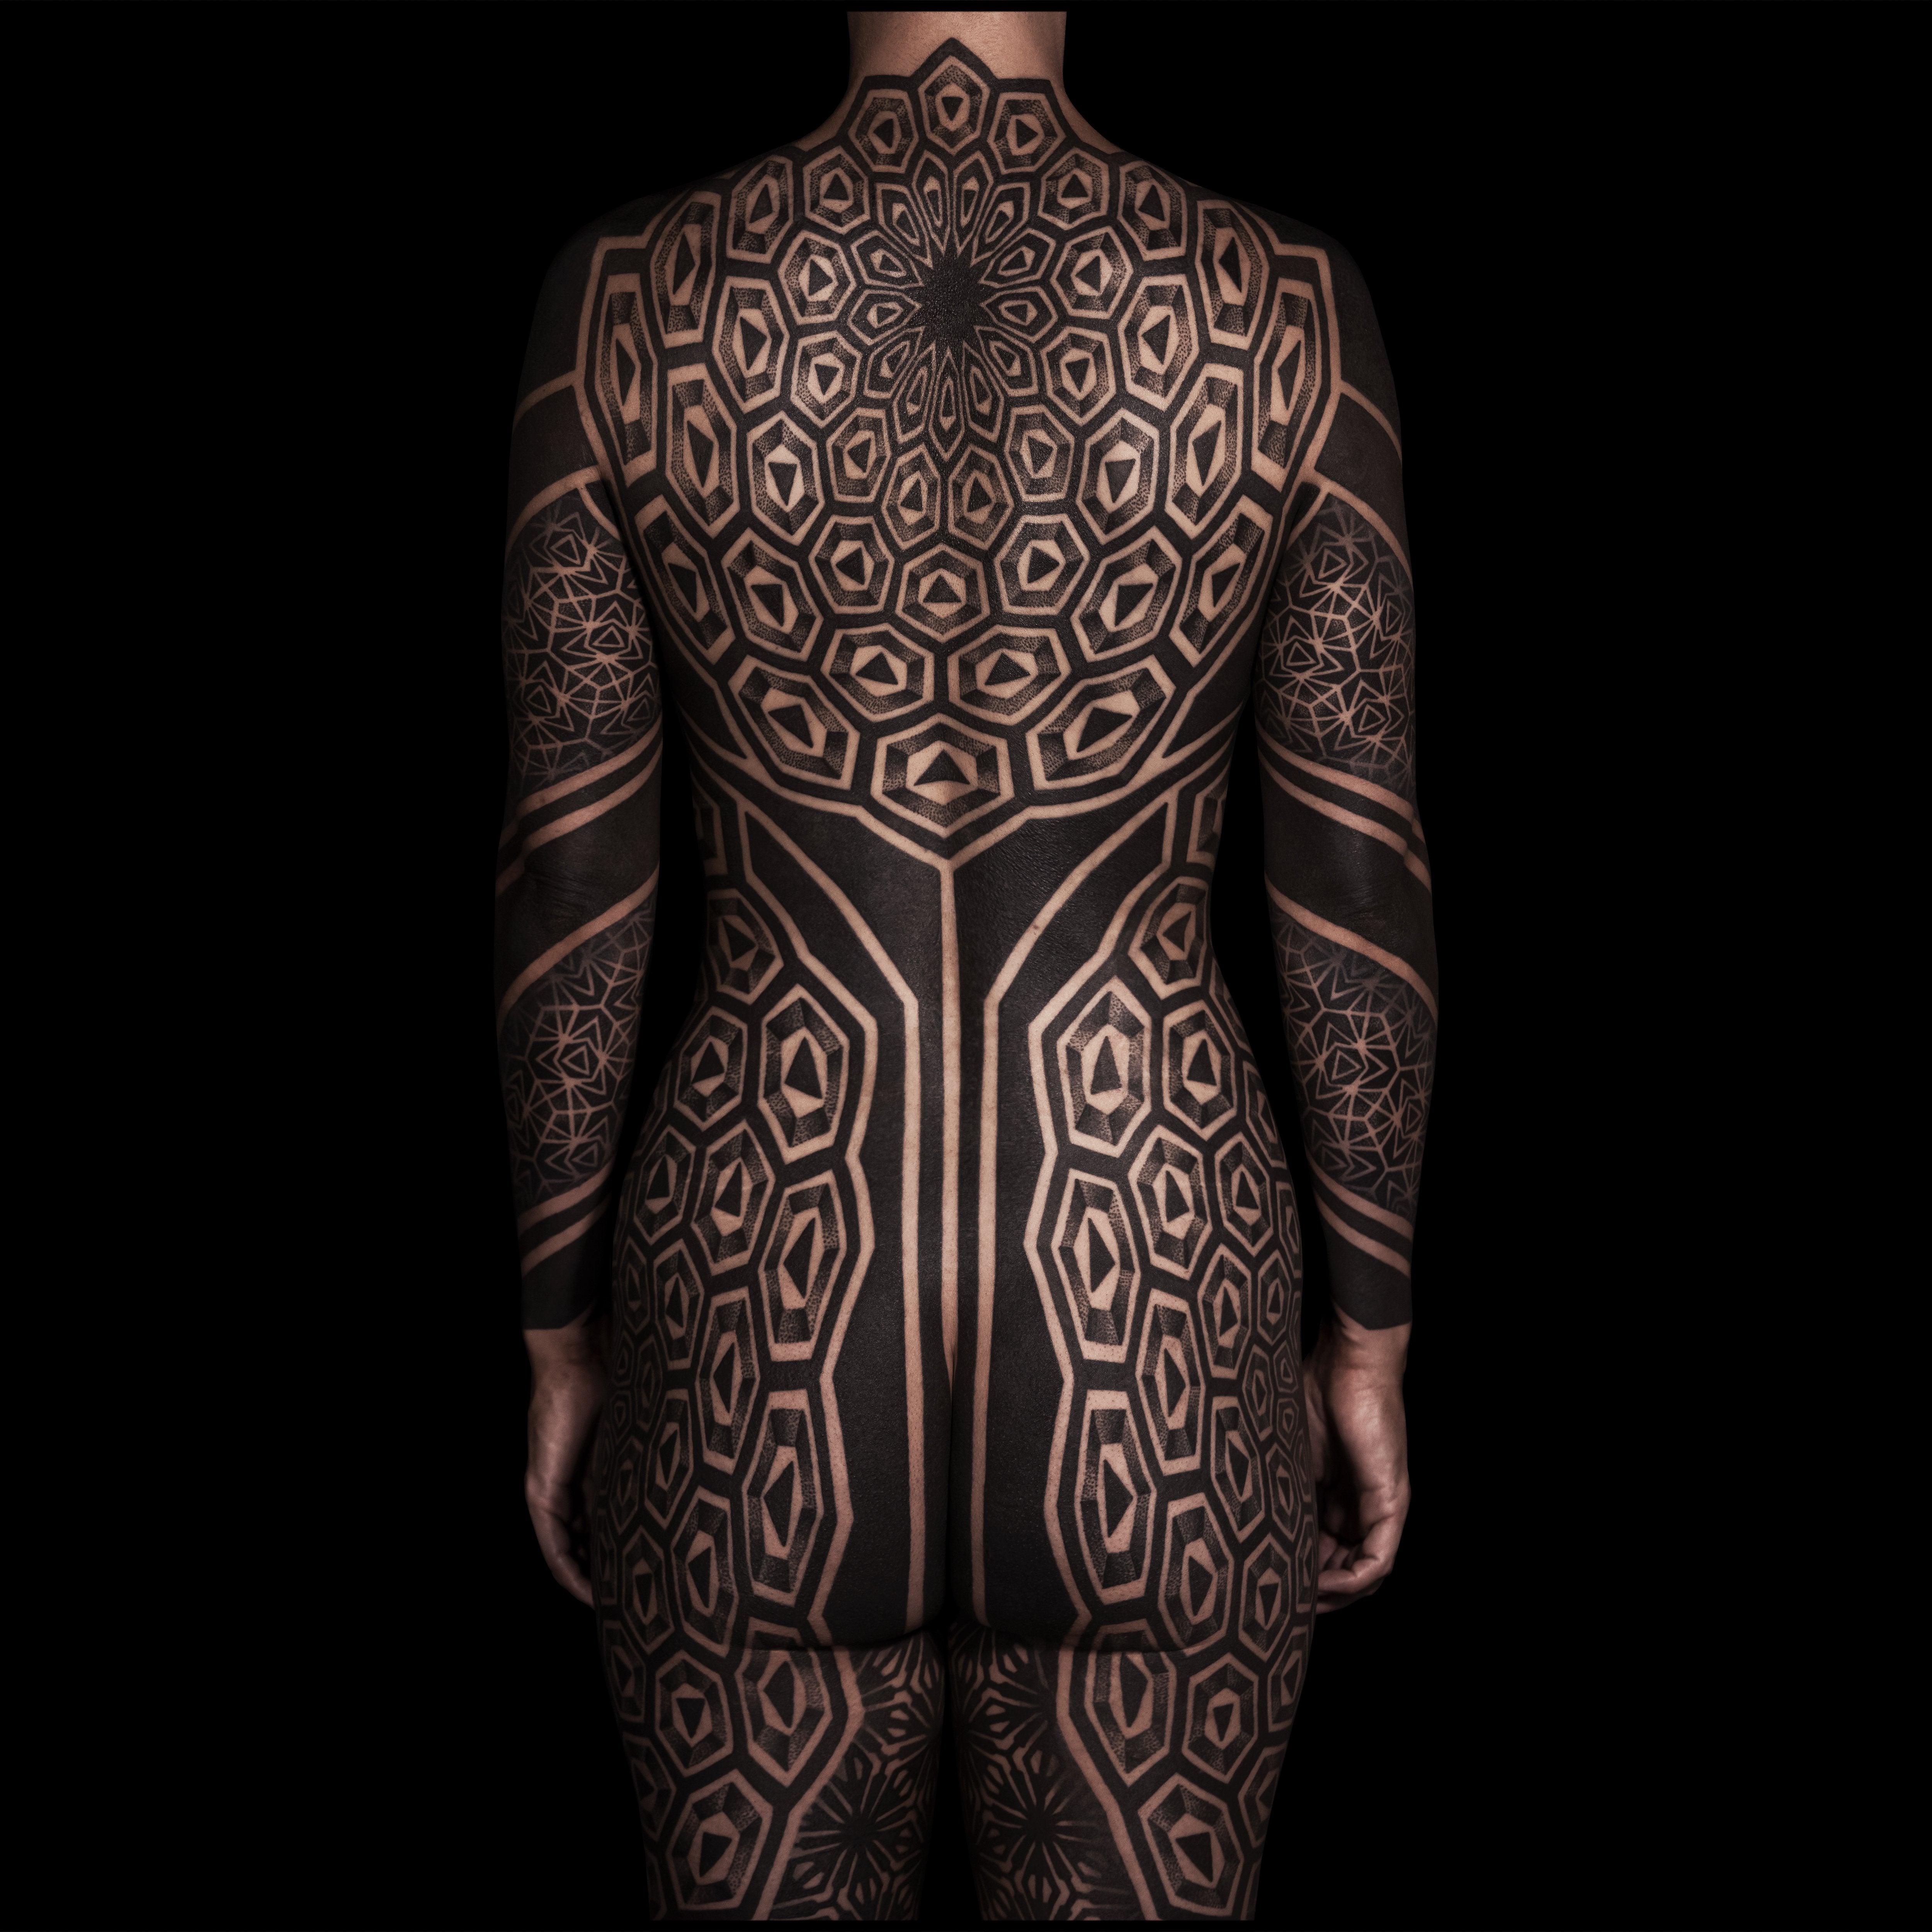 5213 Tattoo Men Suits Images Stock Photos  Vectors  Shutterstock